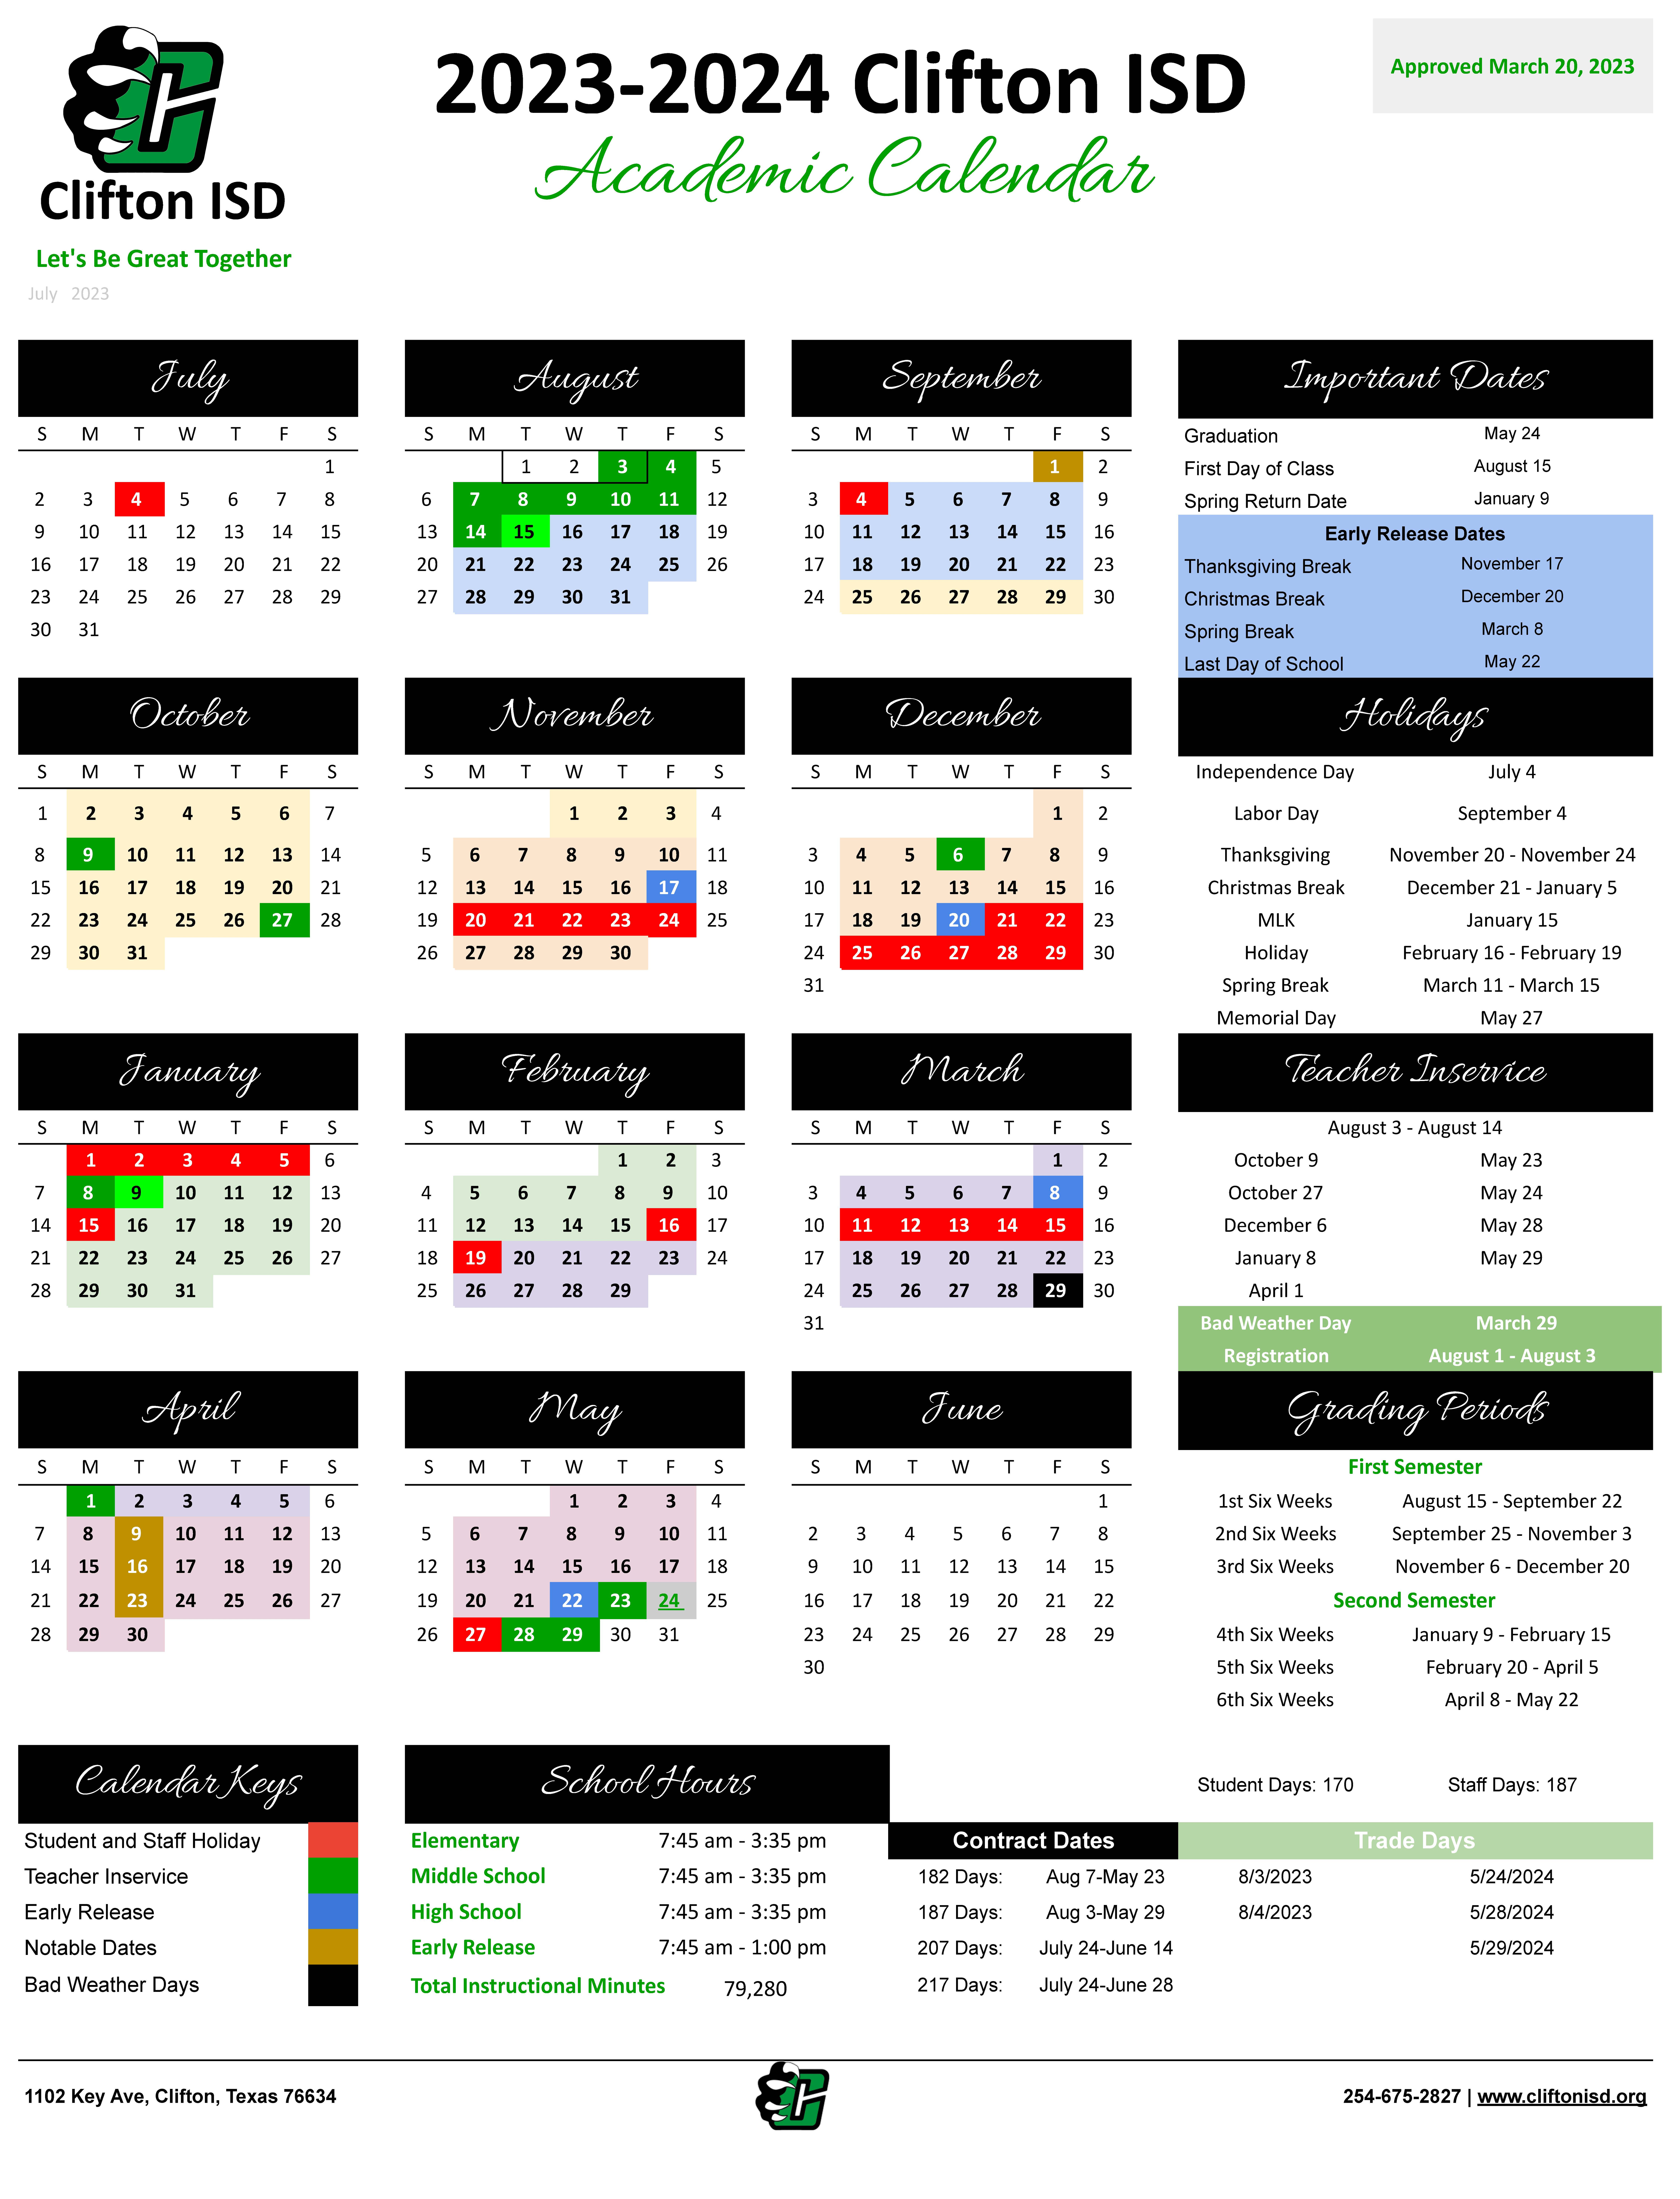 23-24 Secondary Campuses School Calendar: 6 Week Grading Cycles